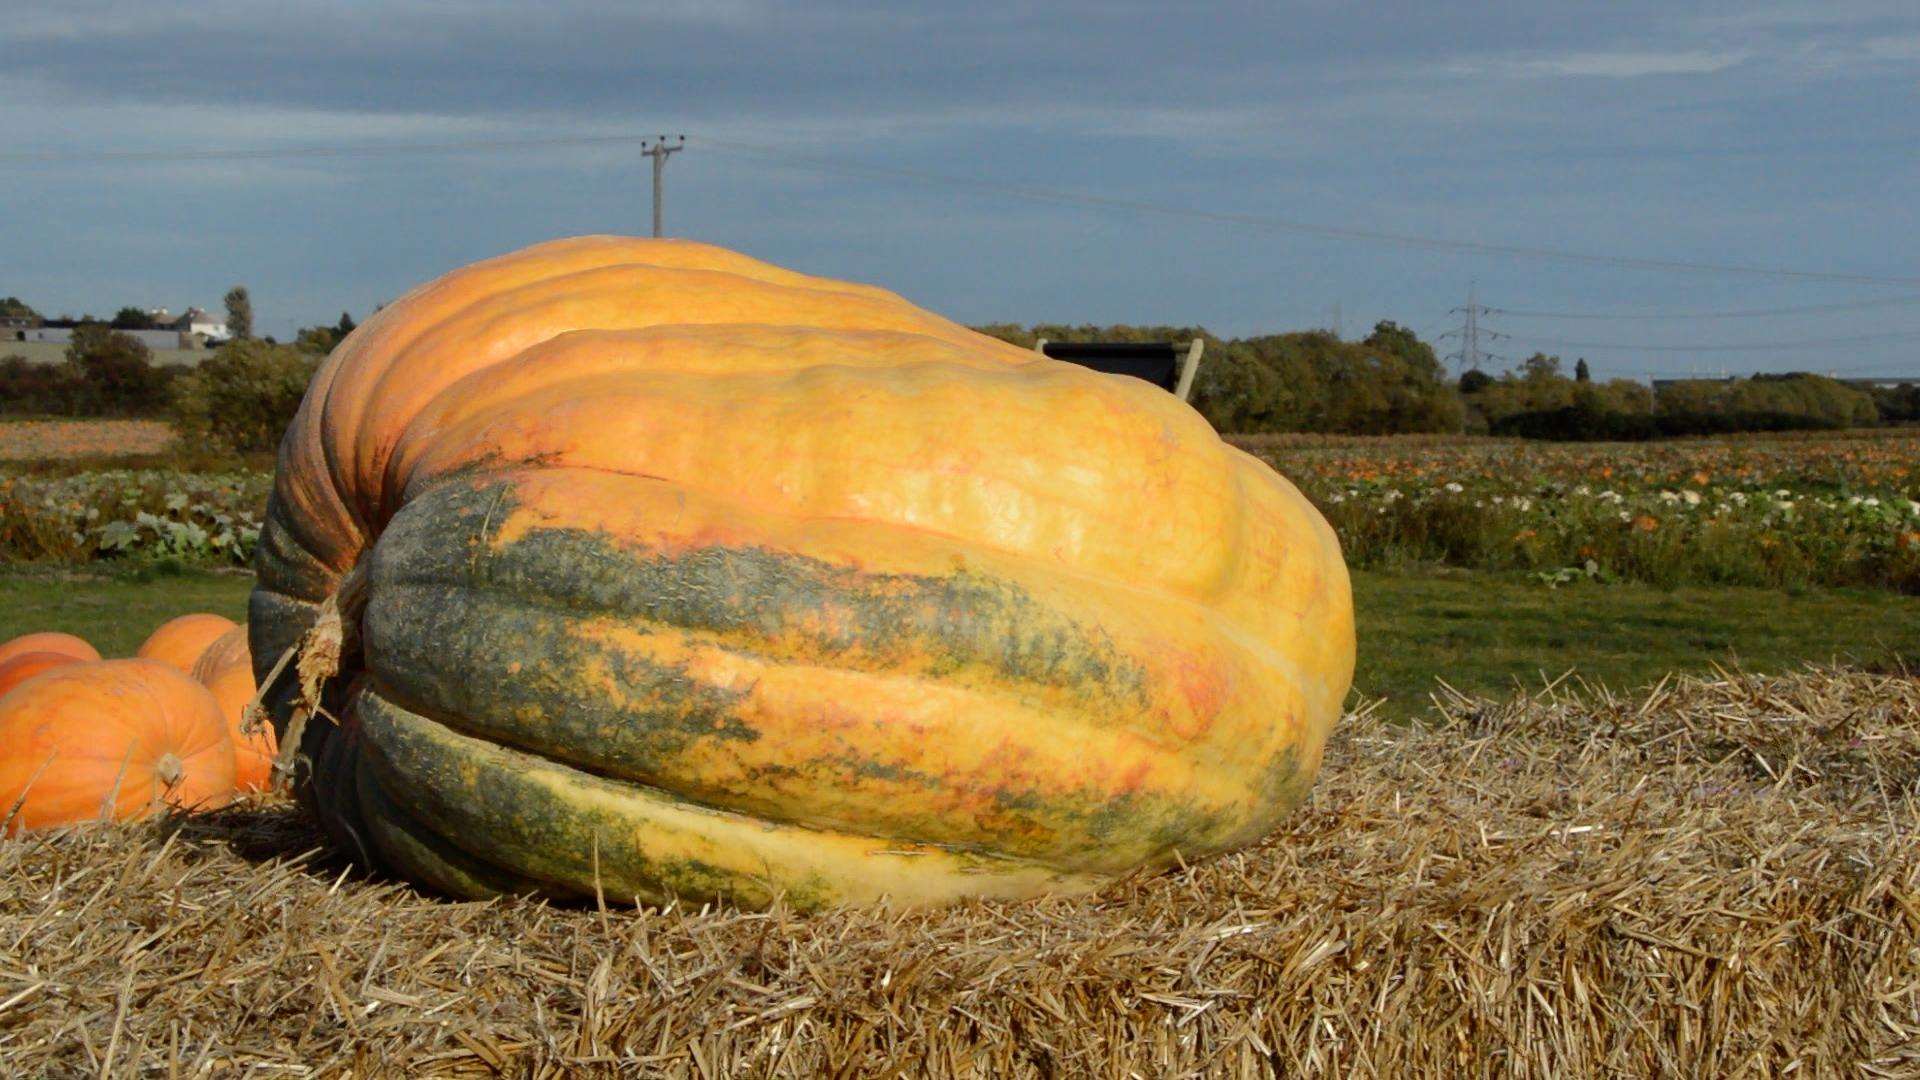 The largest Pumpkin ever to be grown in Beluncle Farm Hoo (4856104)